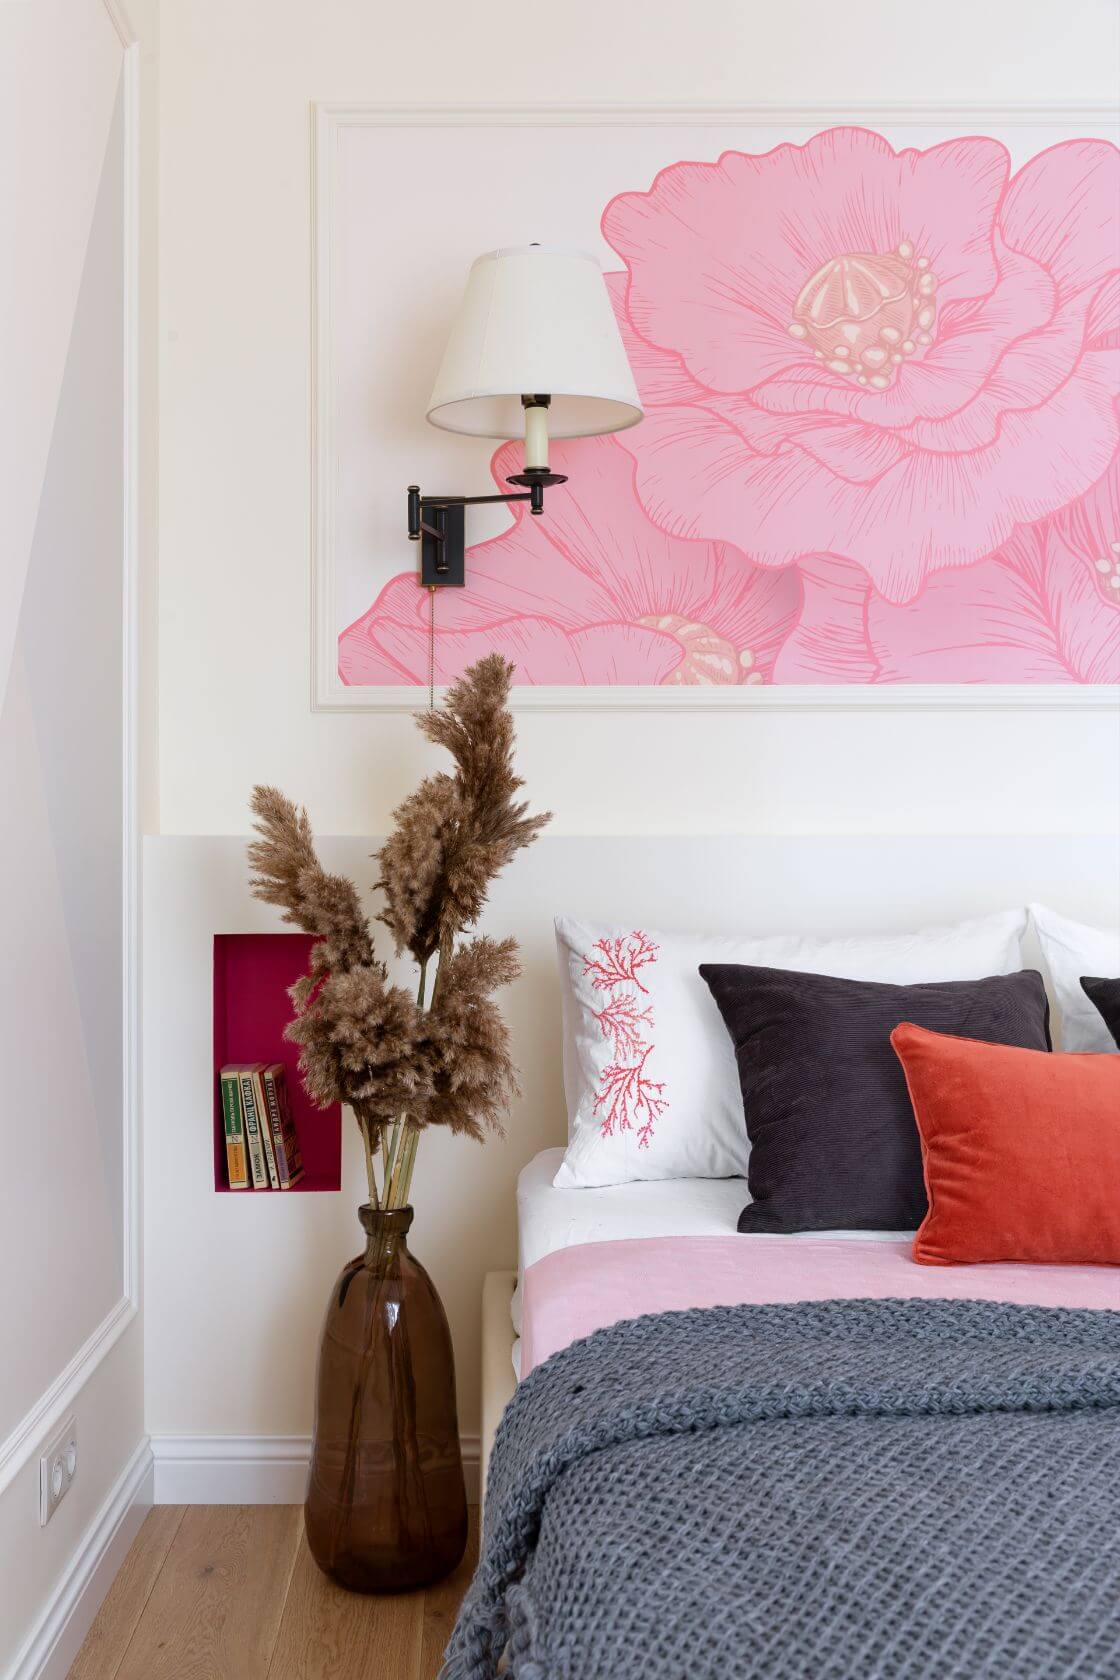 pat, vaza cu plante si tapet  intr-un dormitor mic cu accente de roz